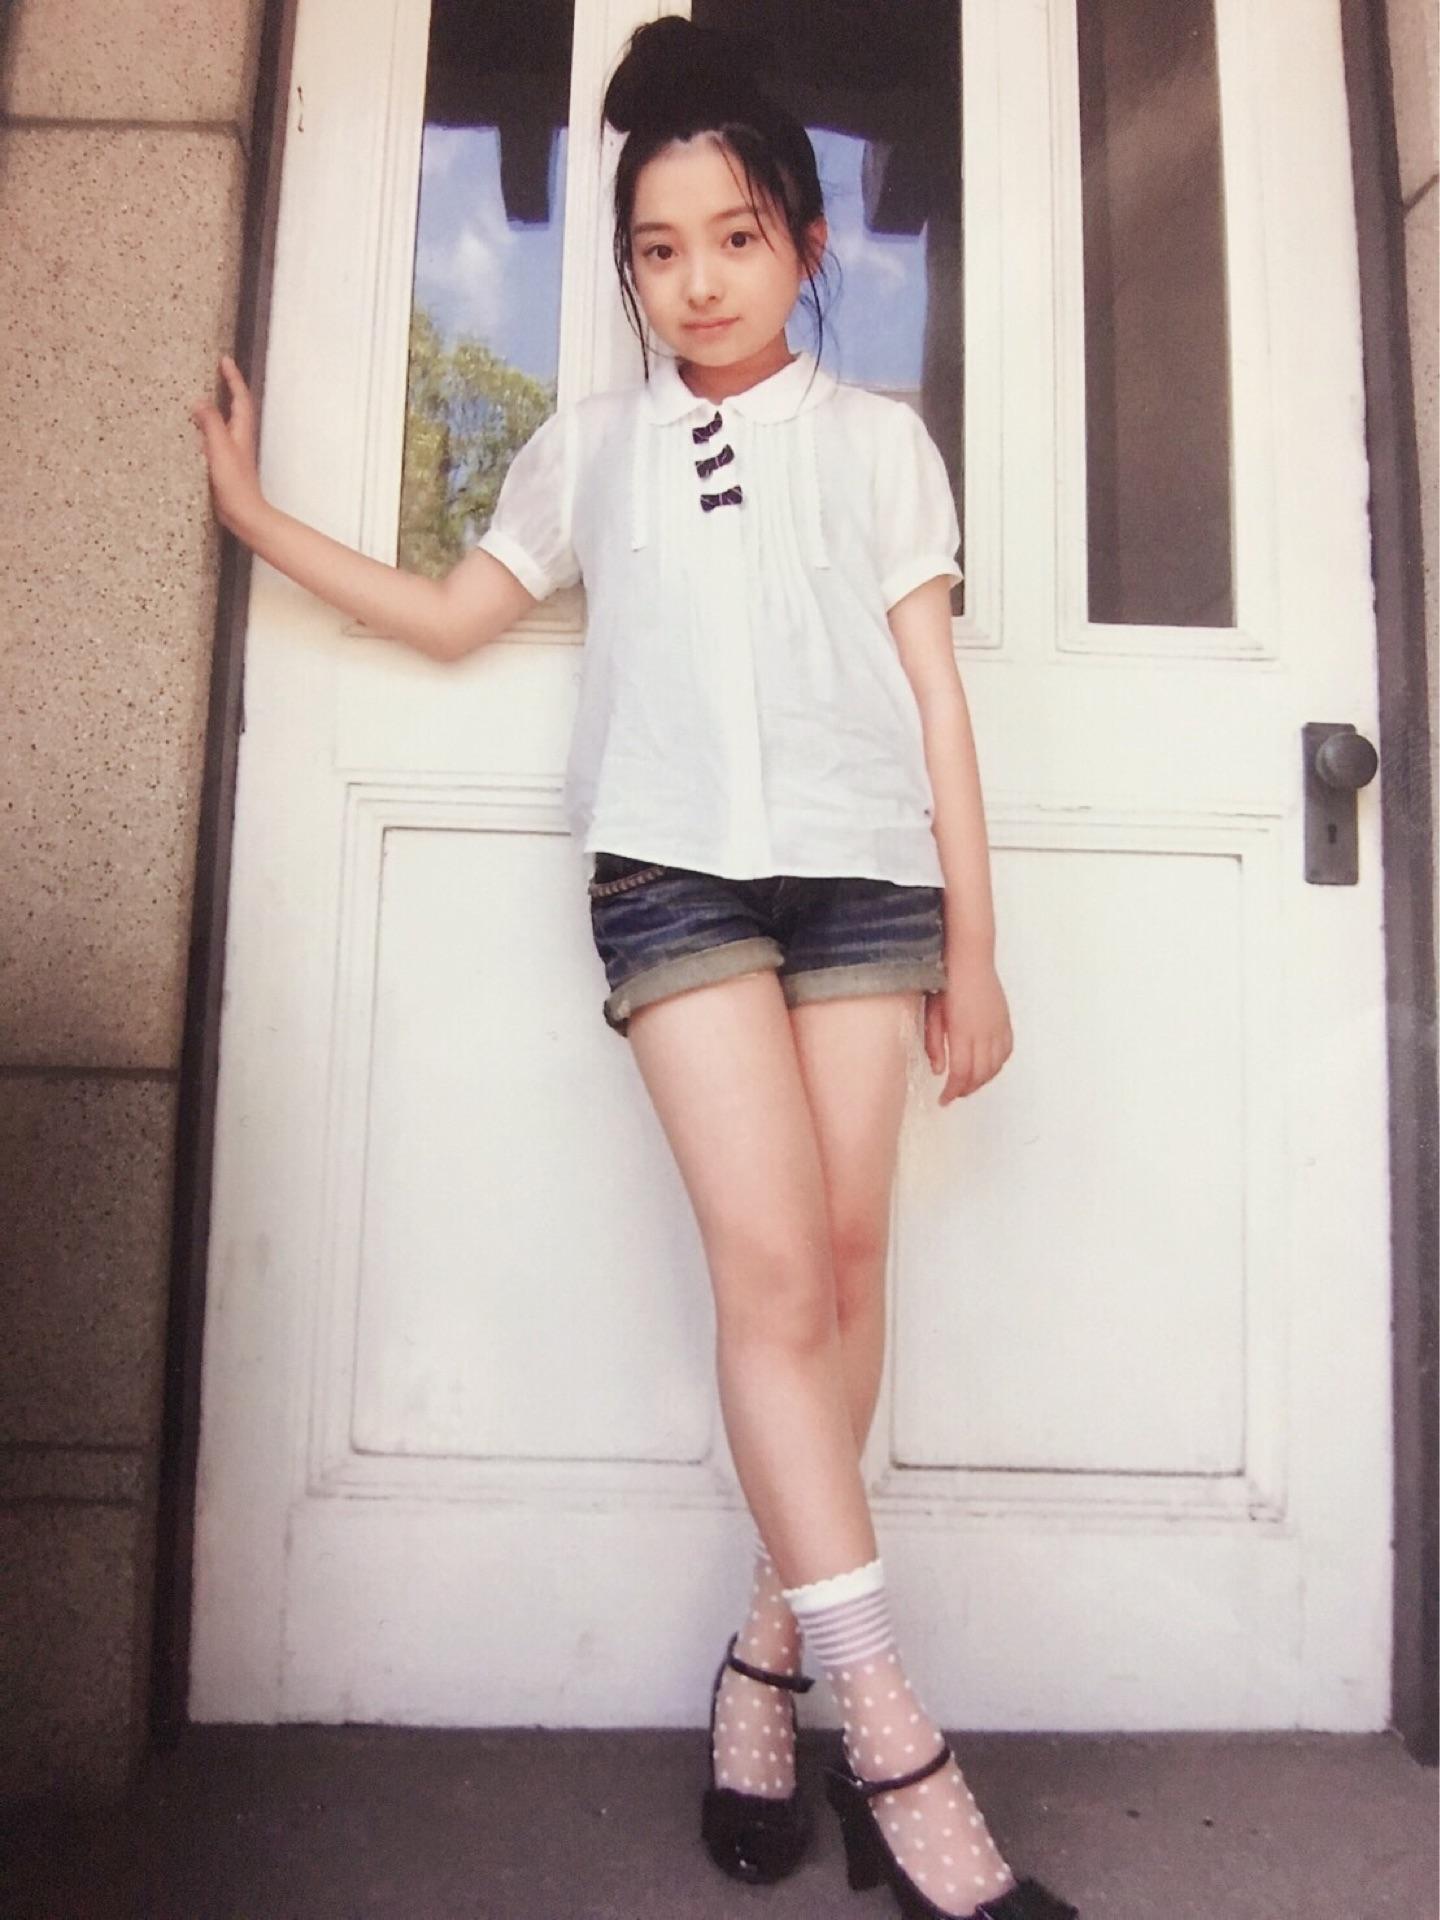 【AKB48】16期生応援スレ☆15 	->画像>300枚 